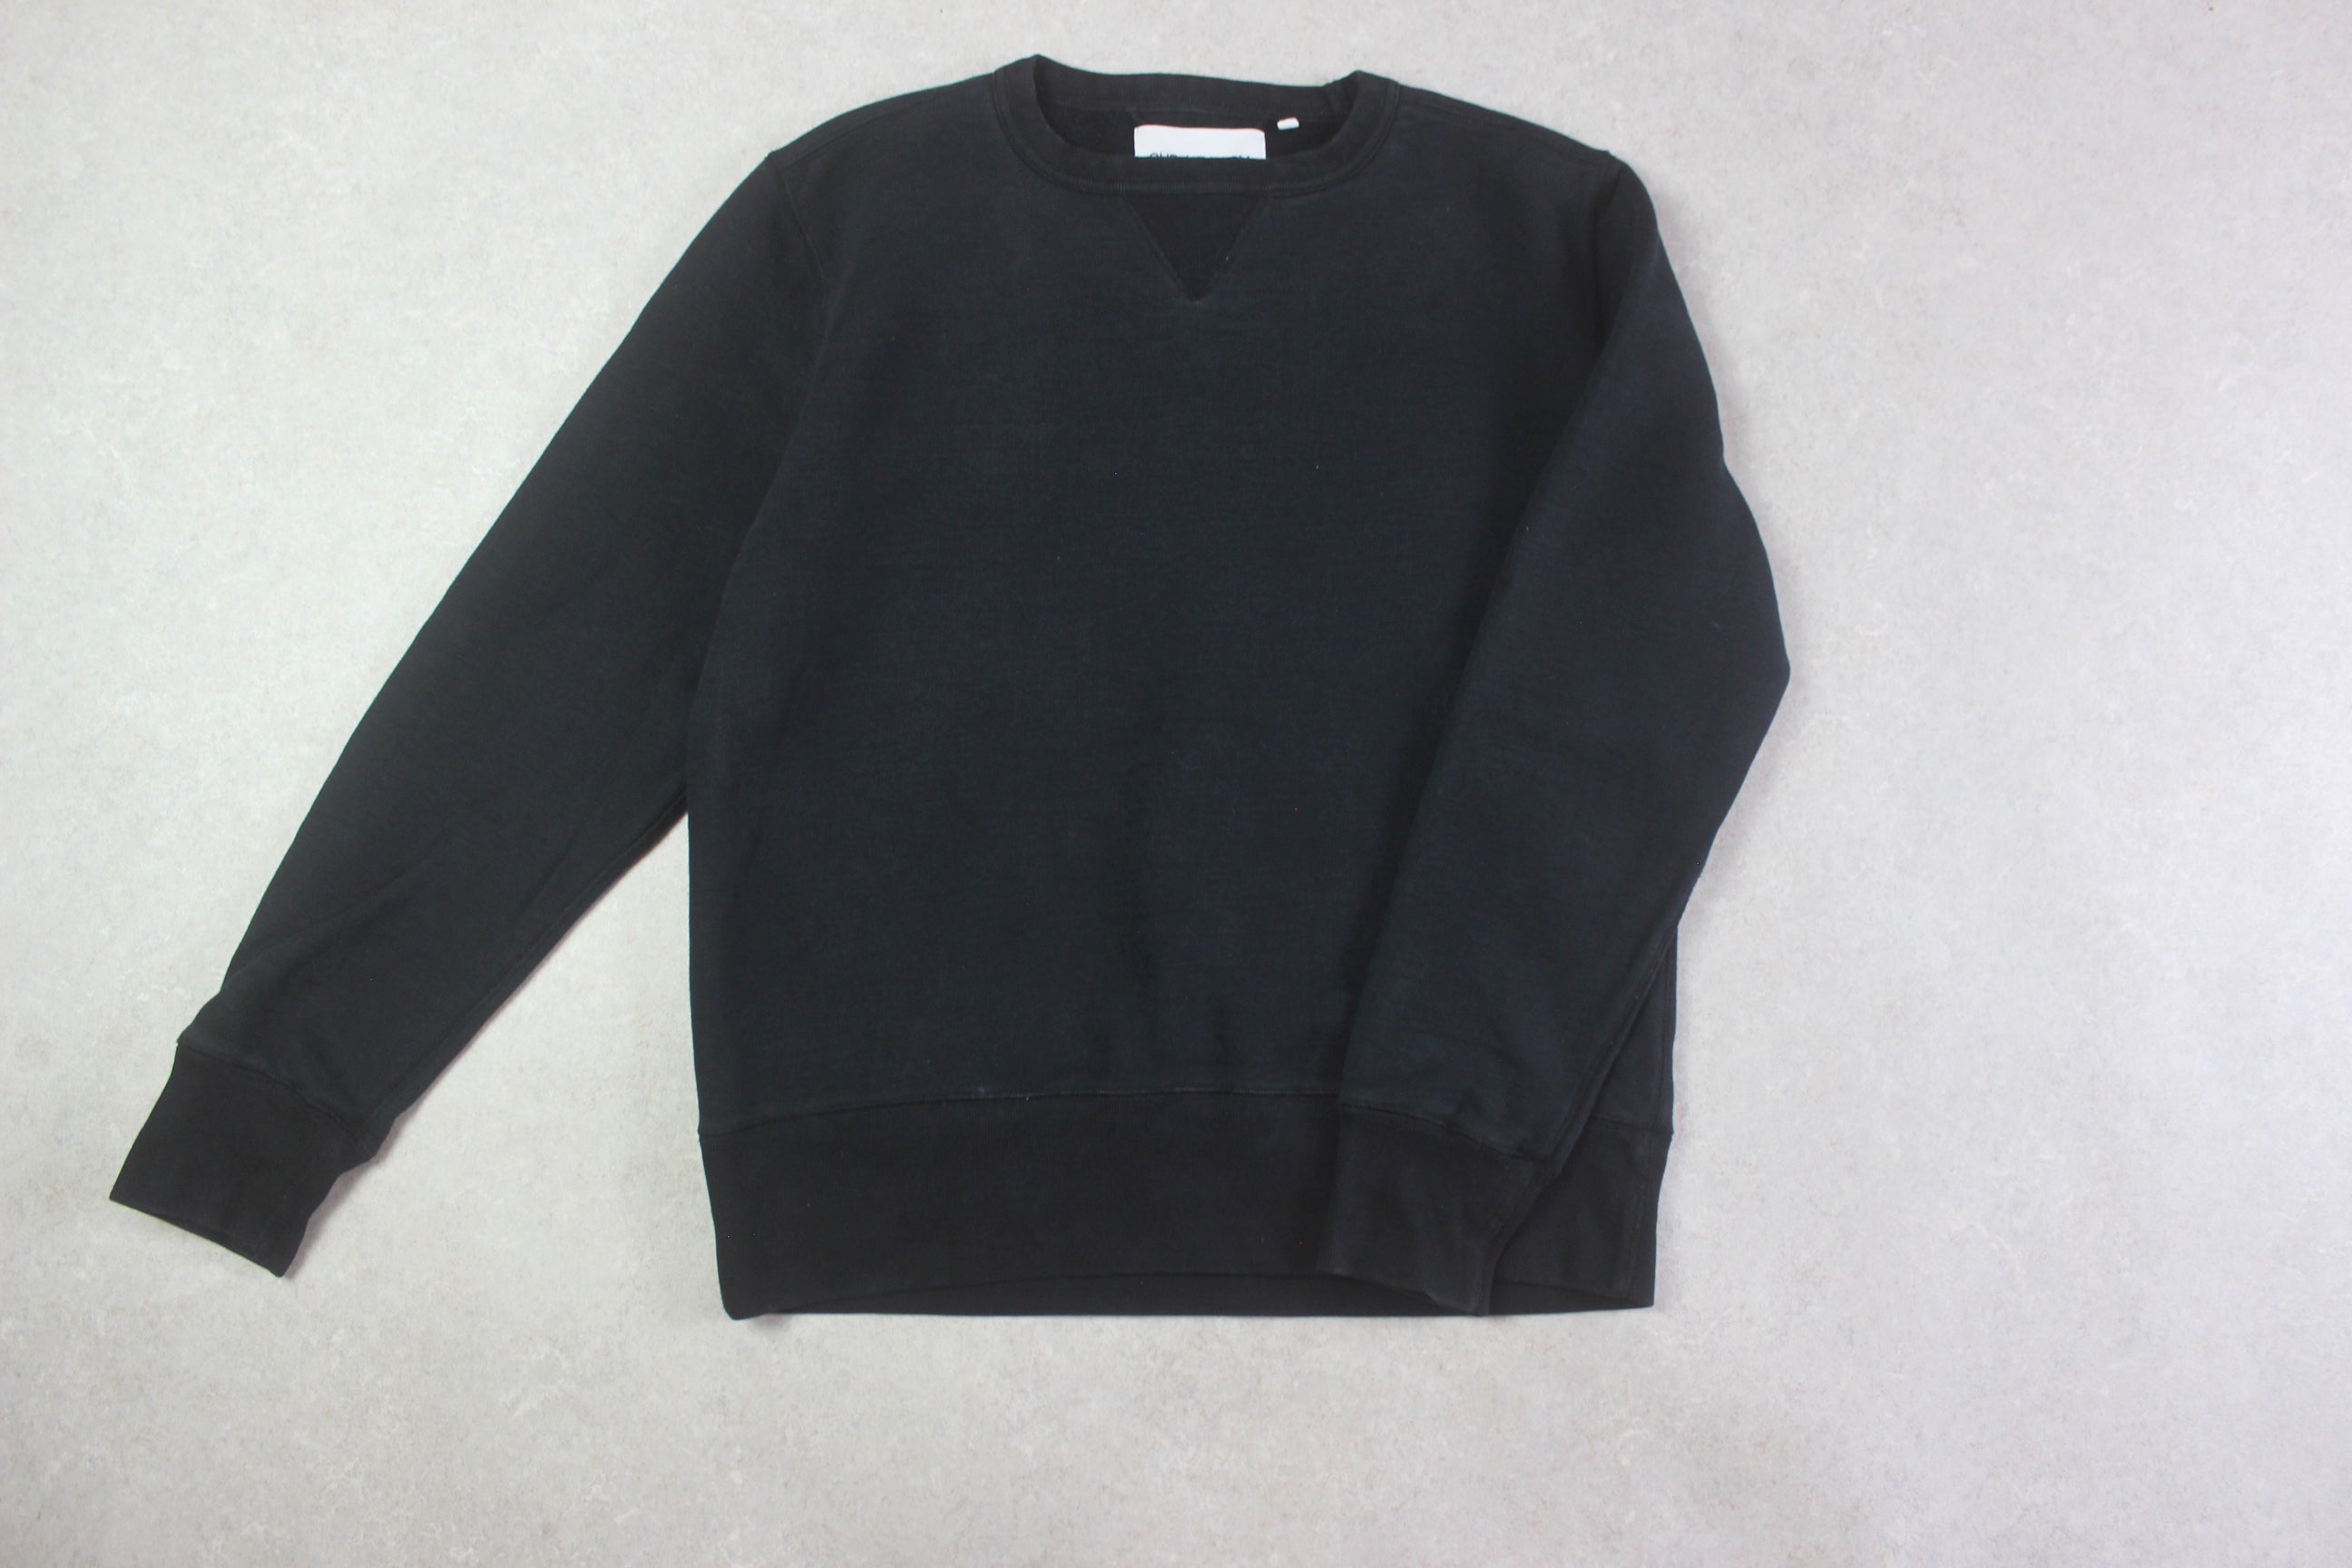 Our Legacy - Sweatshirt Jumper - Black - 48/Medium